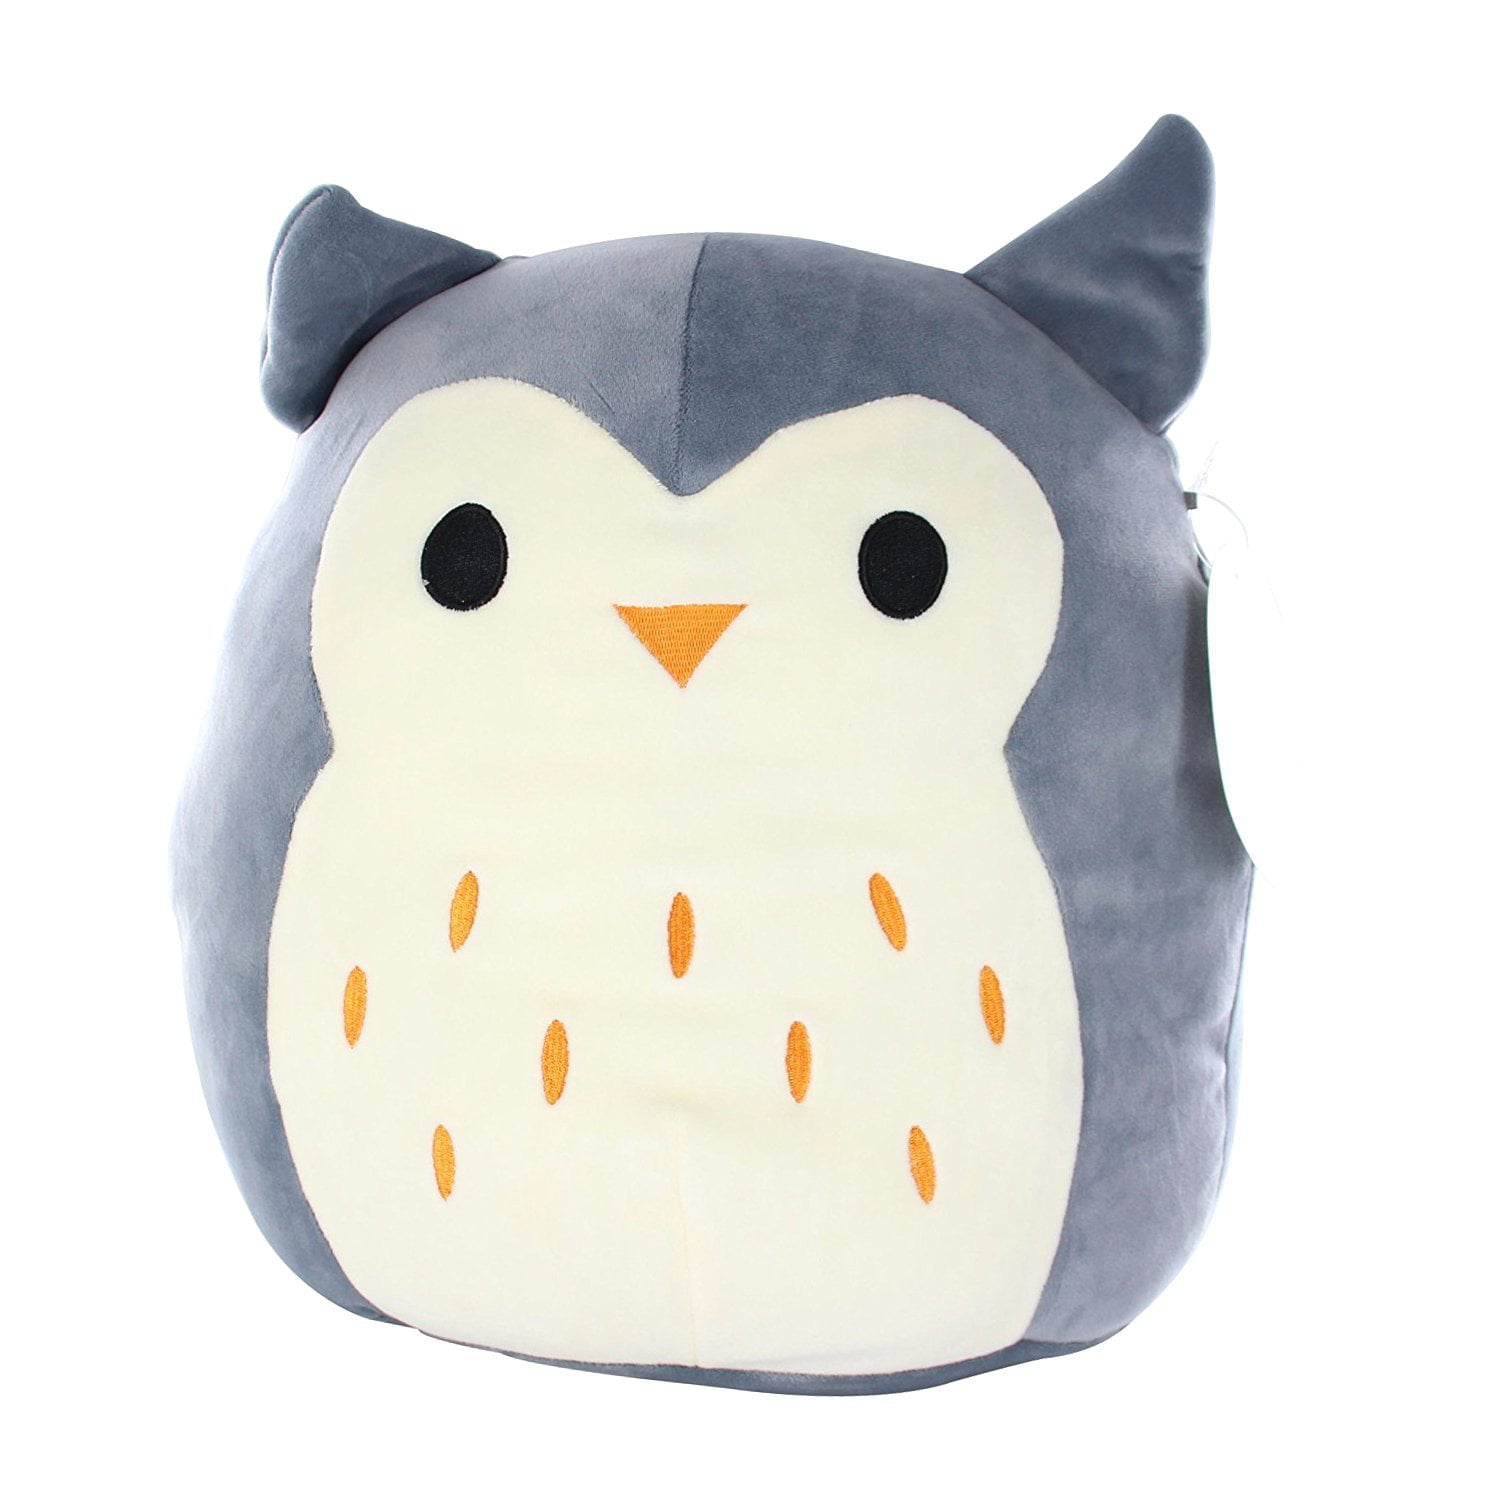 squishy owl pillow